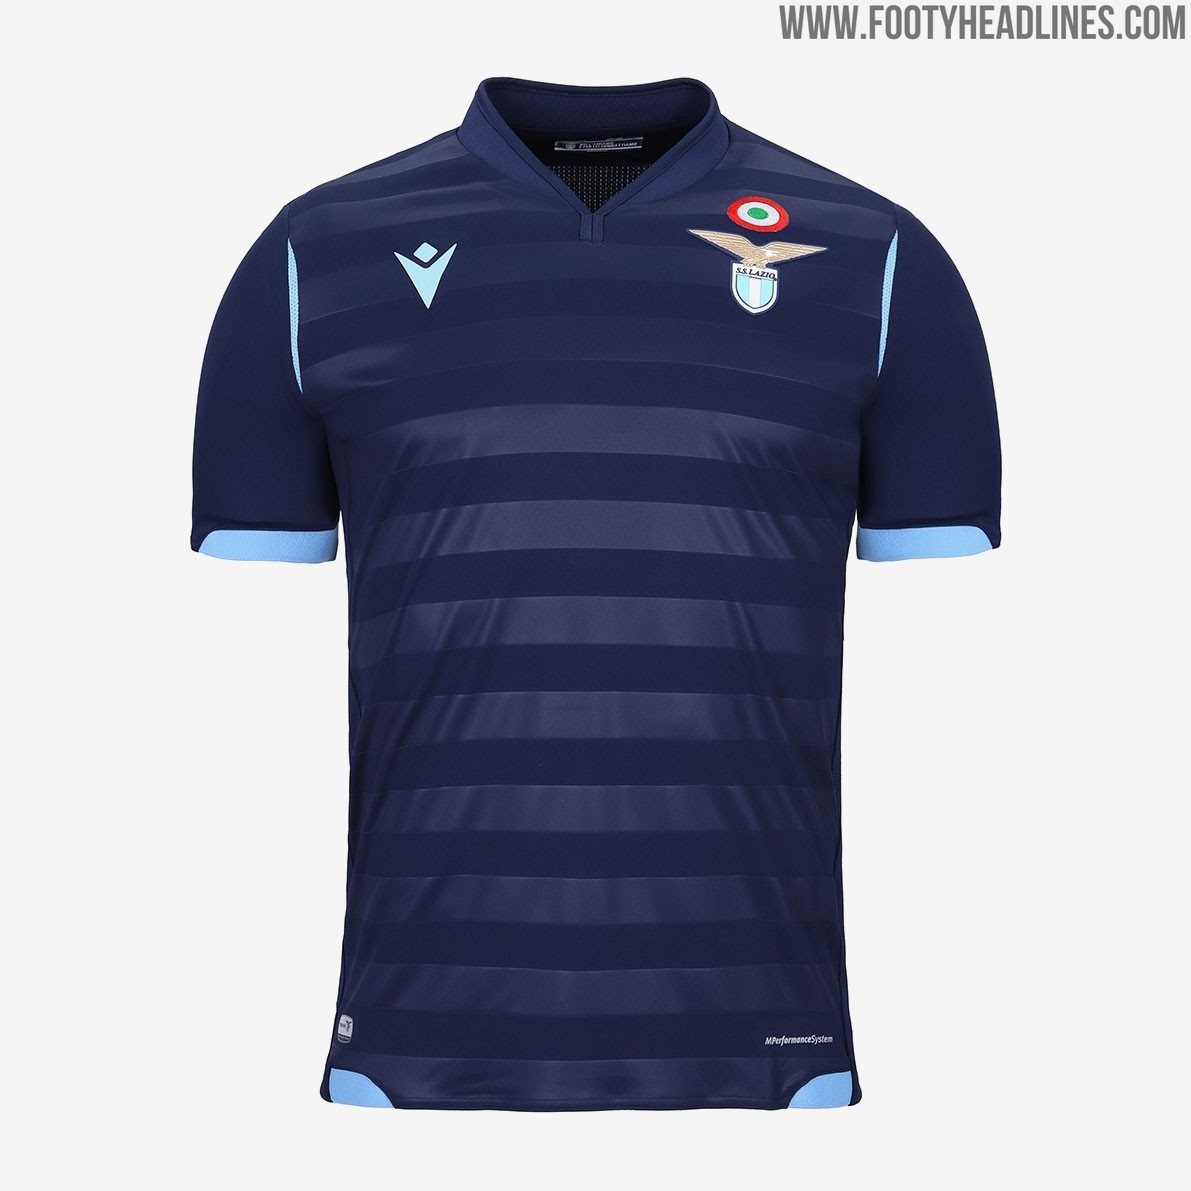 Lazio 19-20 Home, Away & Third Kits Released - Footy Headlines